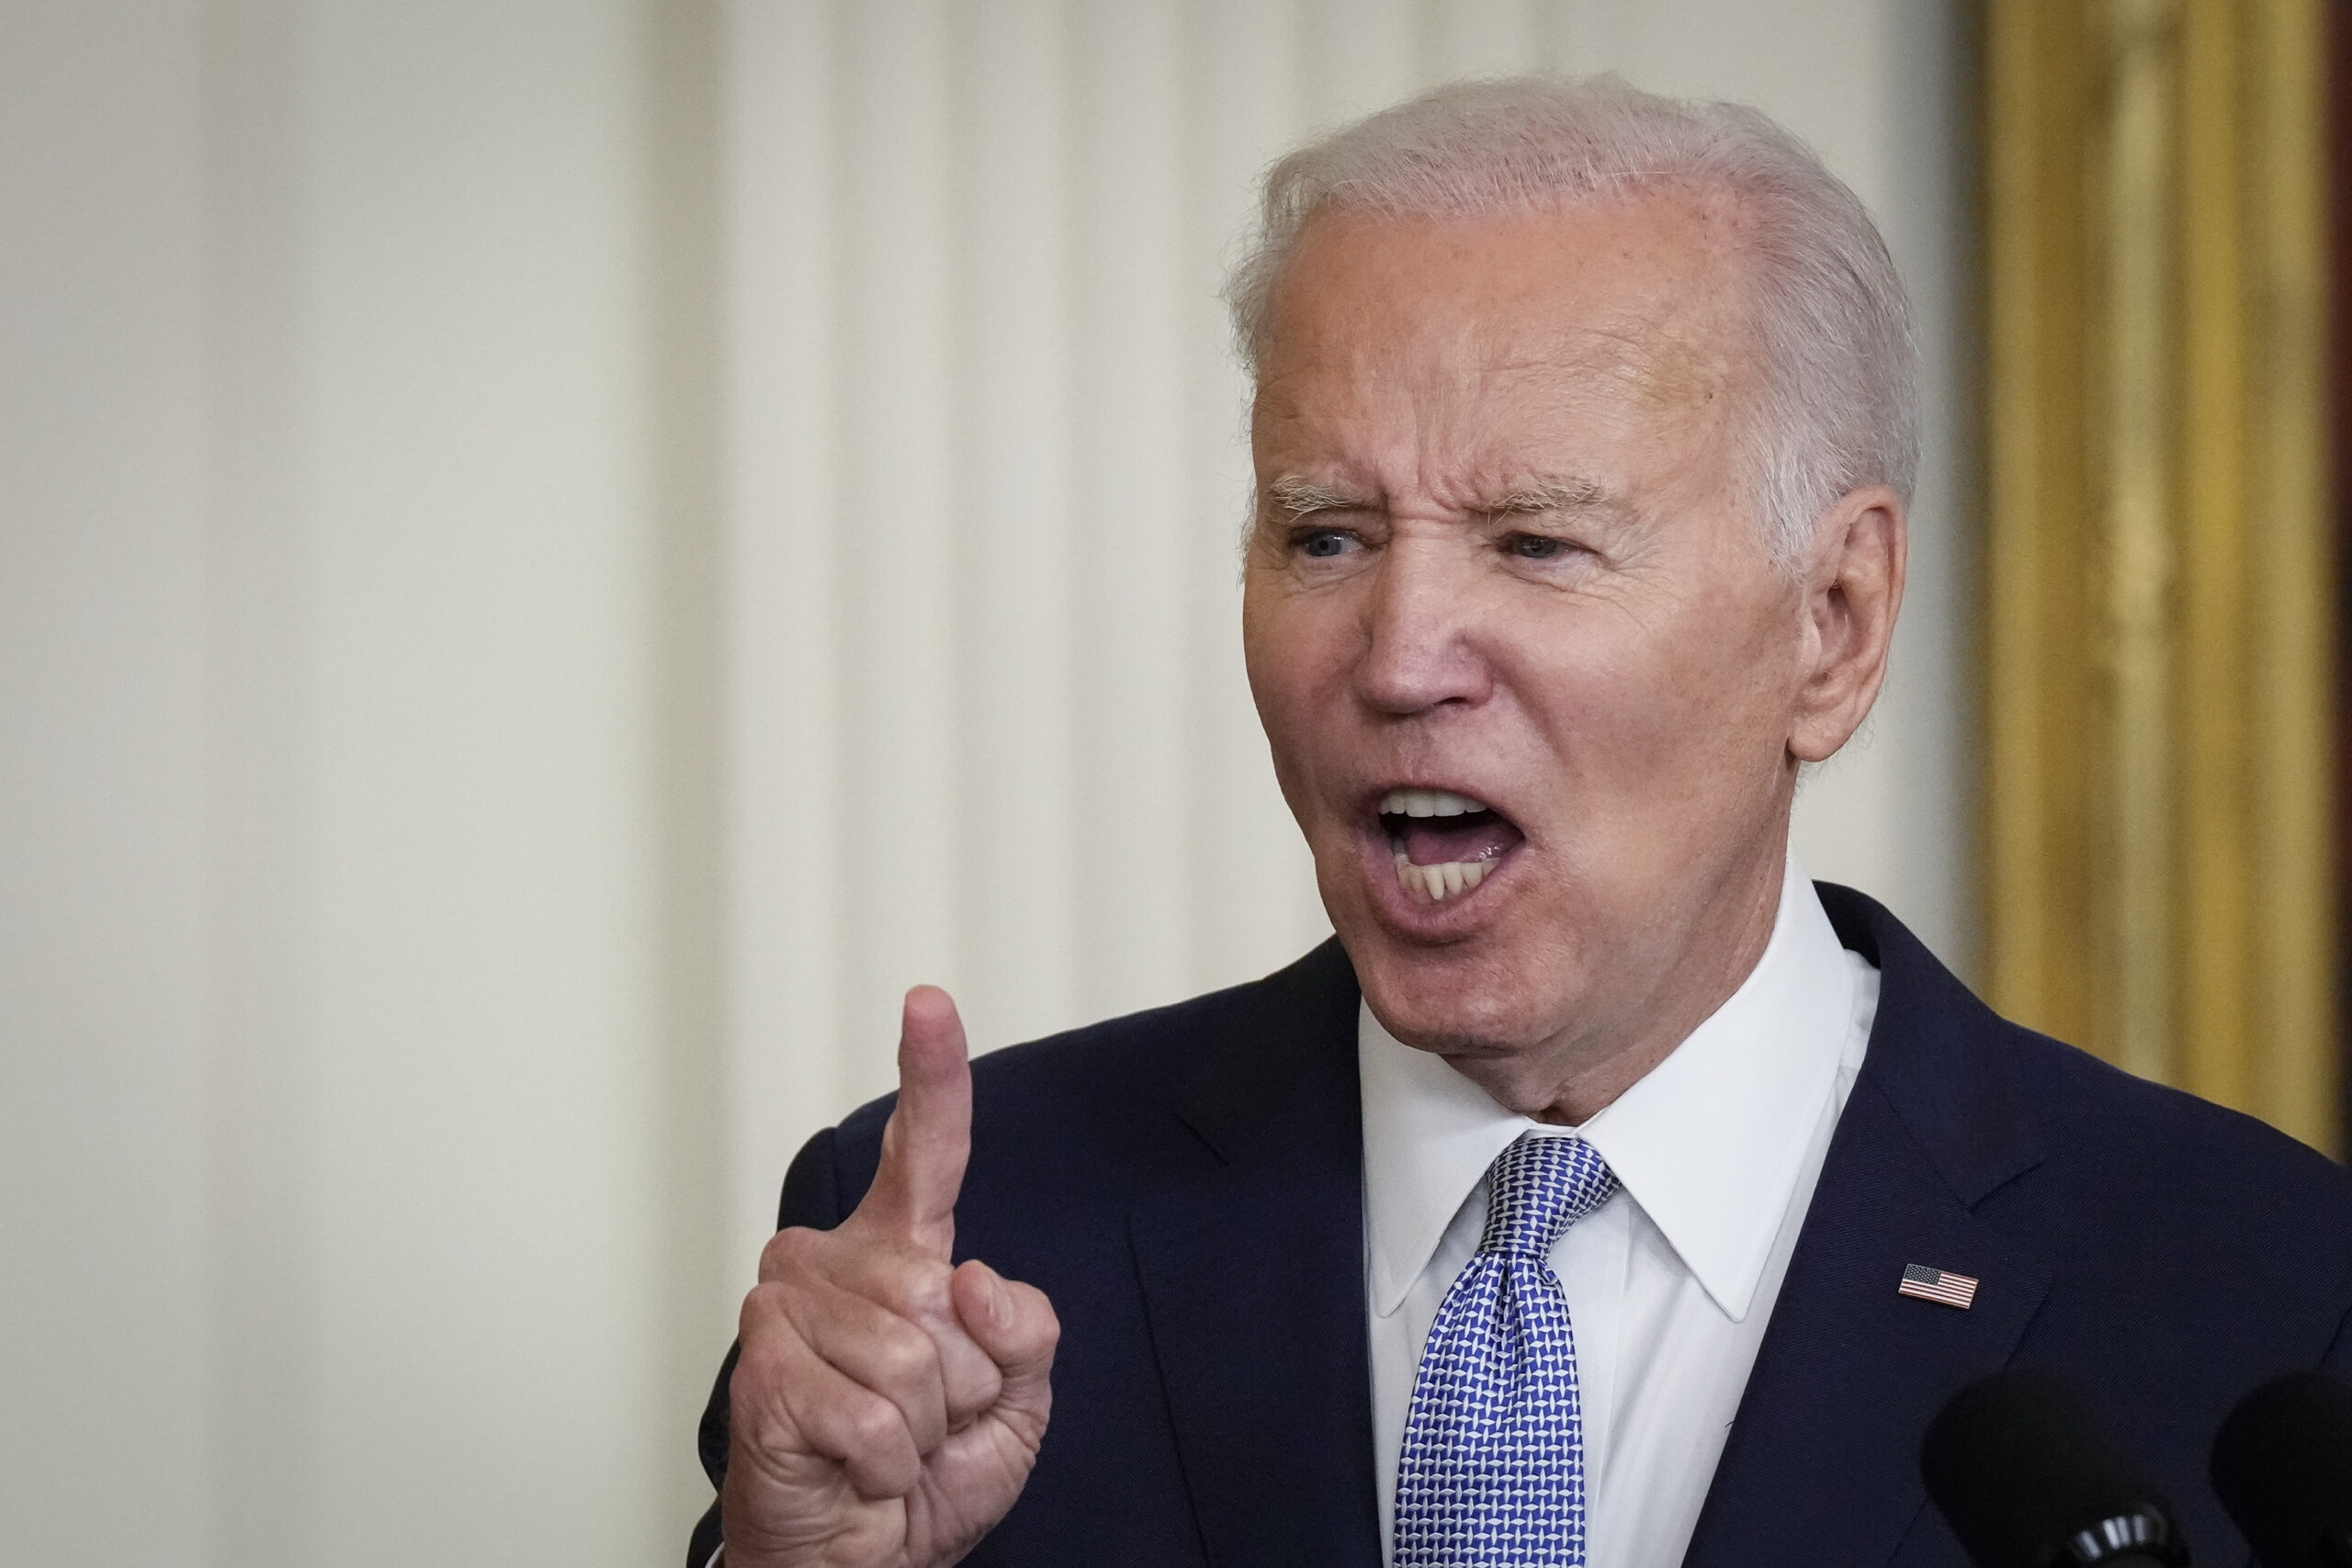 Joe Biden Takes Full Responsibility For Blaming Donald Trump